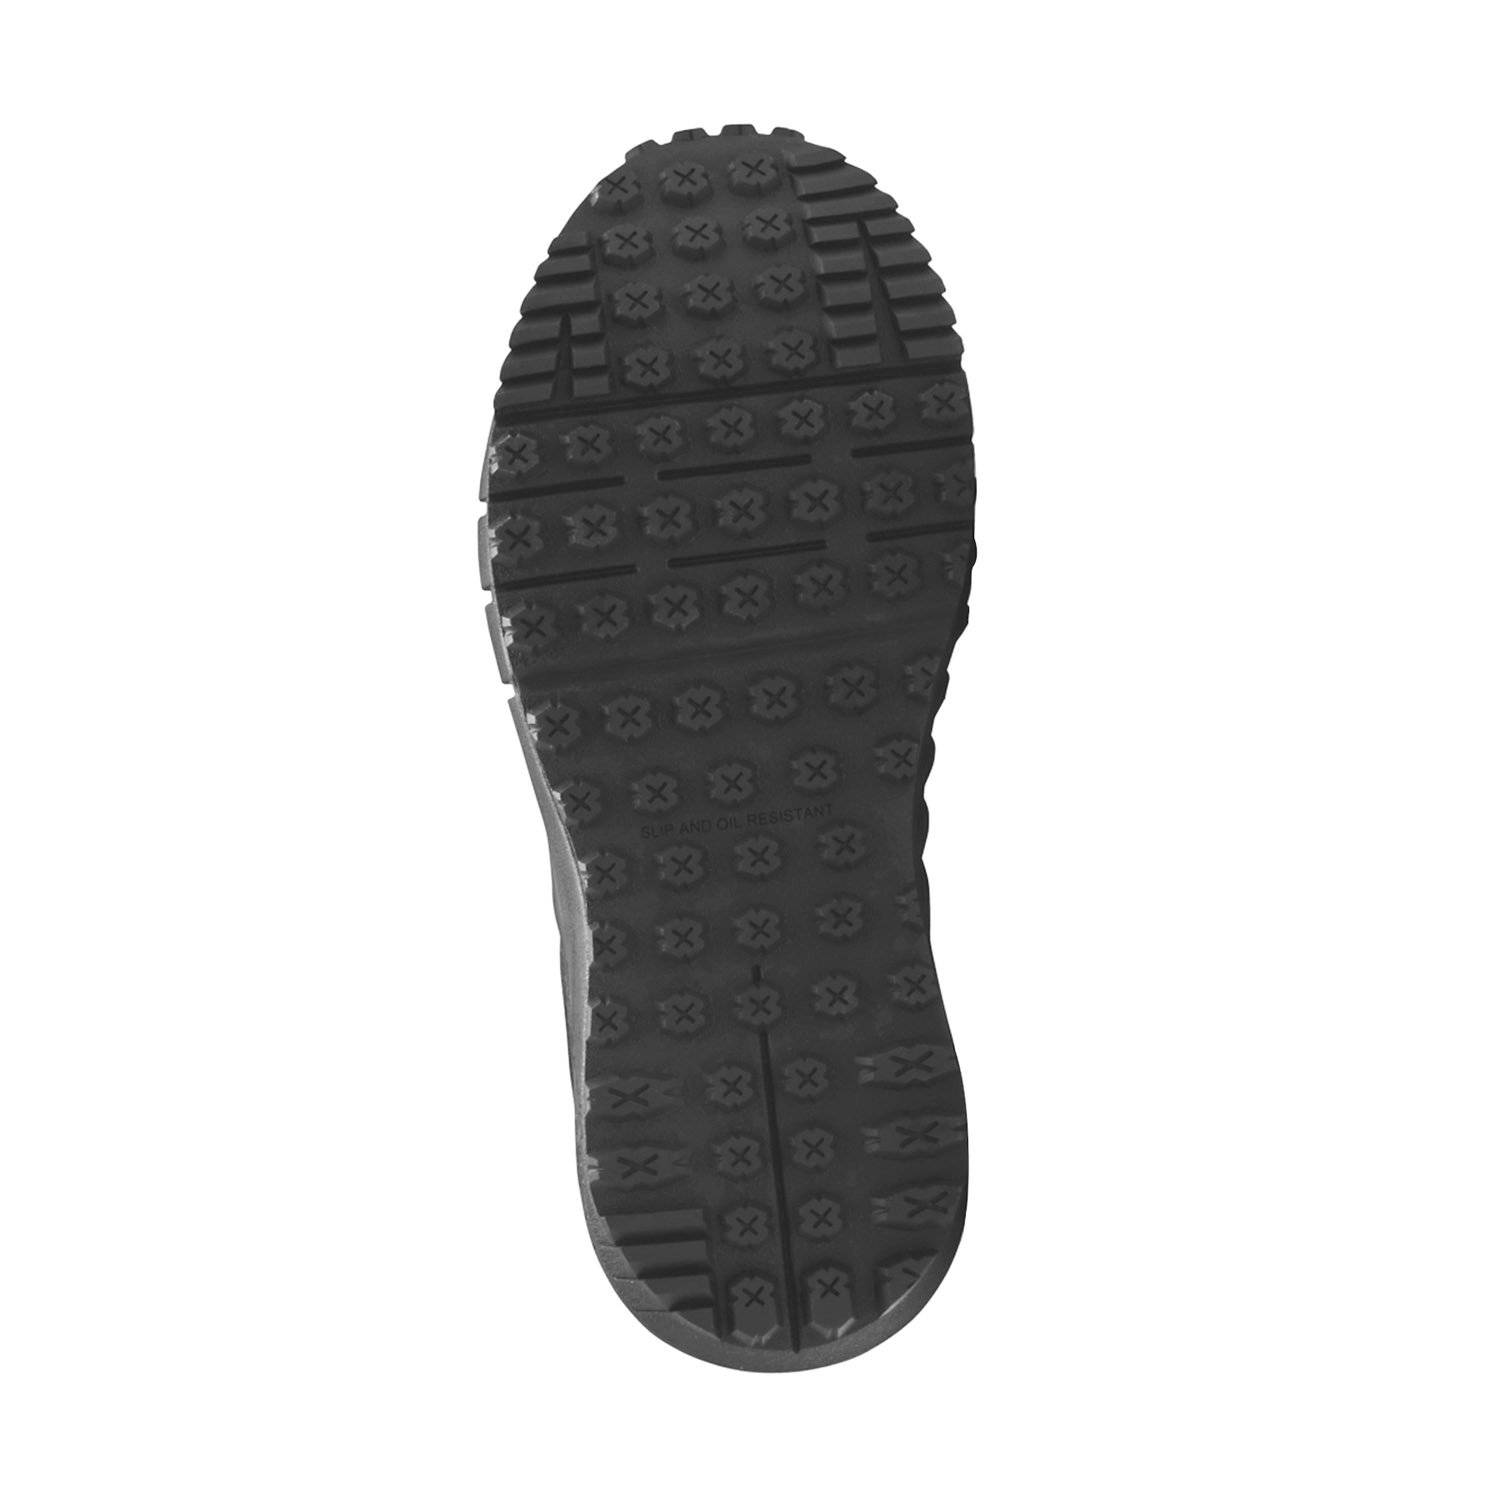 Under Armour 30237420018.5 Women's Micro G Valsetz Mid Size 8.5 Black Boot  for sale online